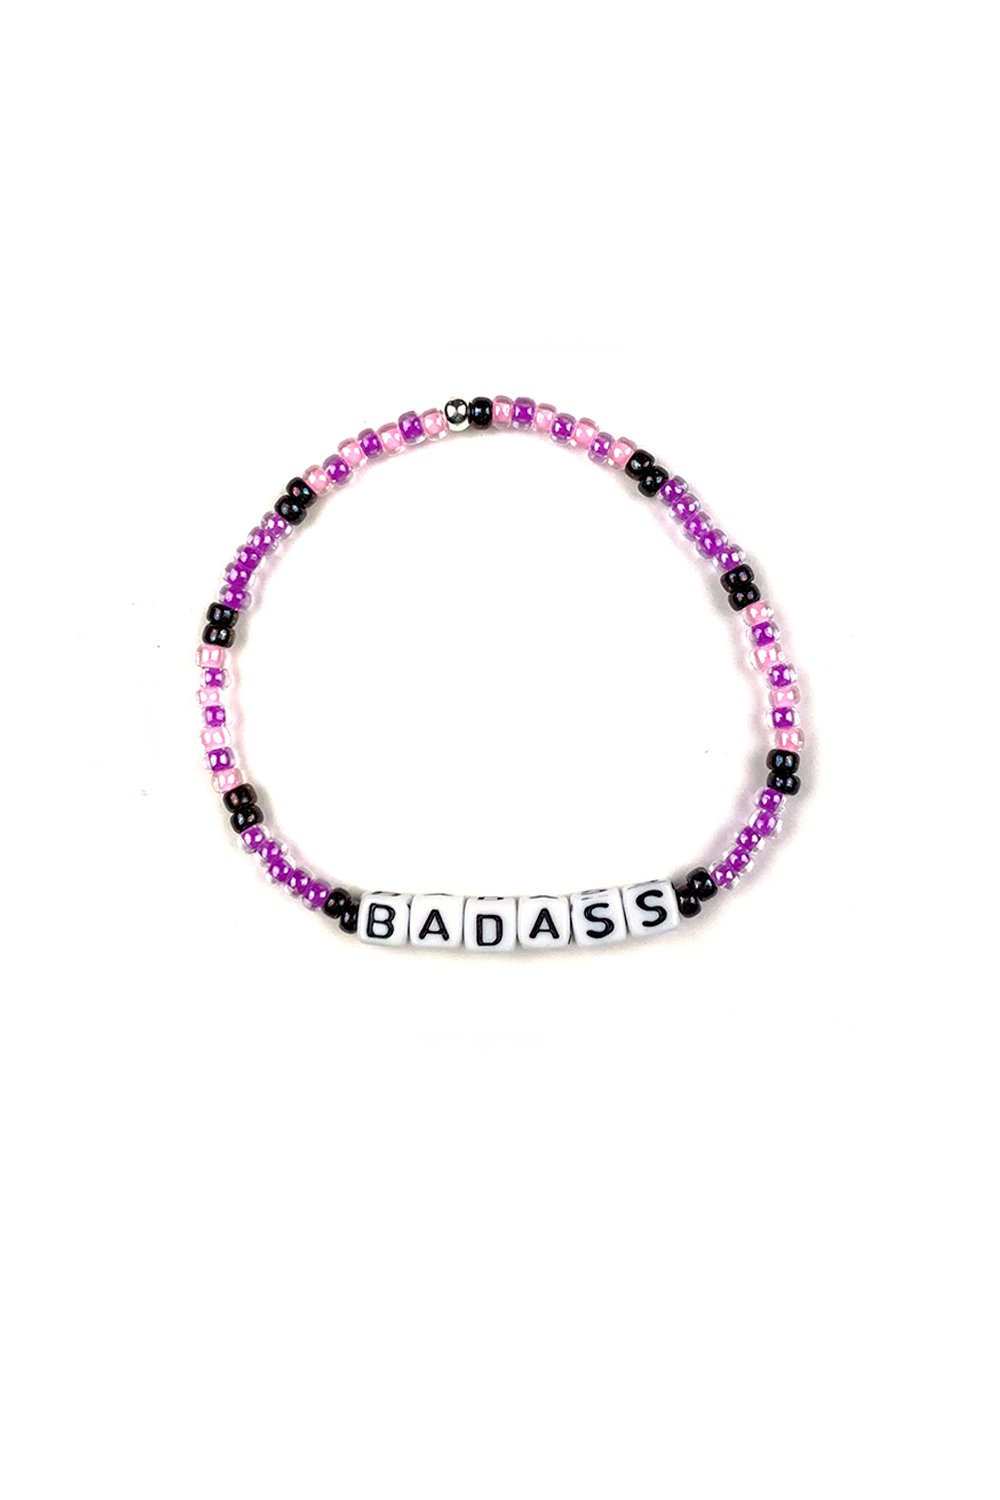 Badass Bracelet - Sarah Marie Design Studio